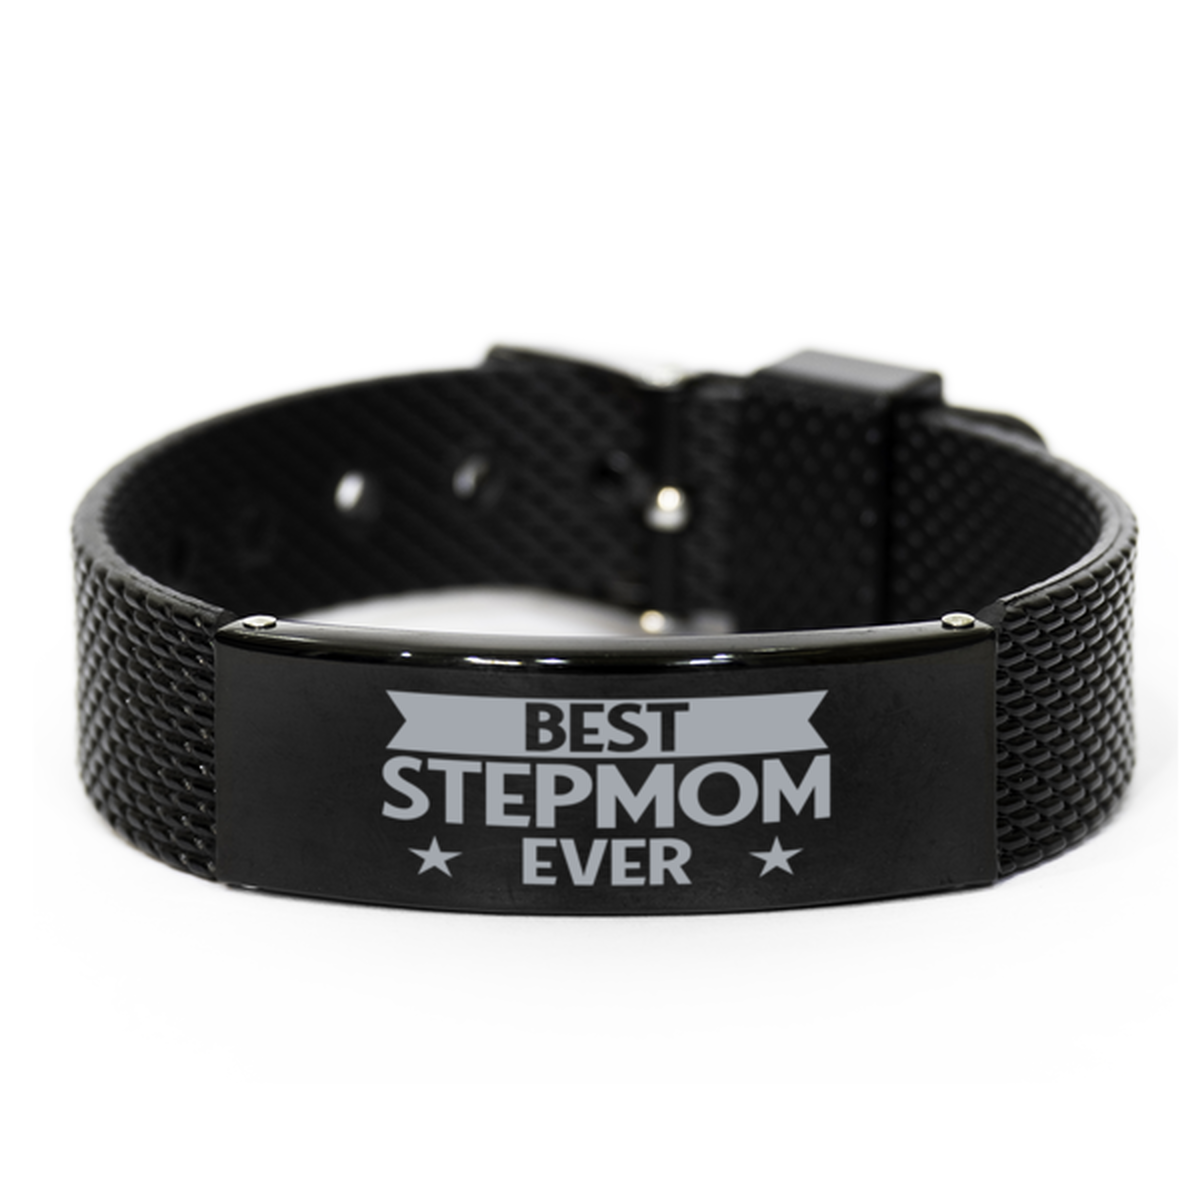 Best Stepmom Ever Stepmom Gifts, Gag Engraved Bracelet For Stepmom, Best Family Gifts For Women